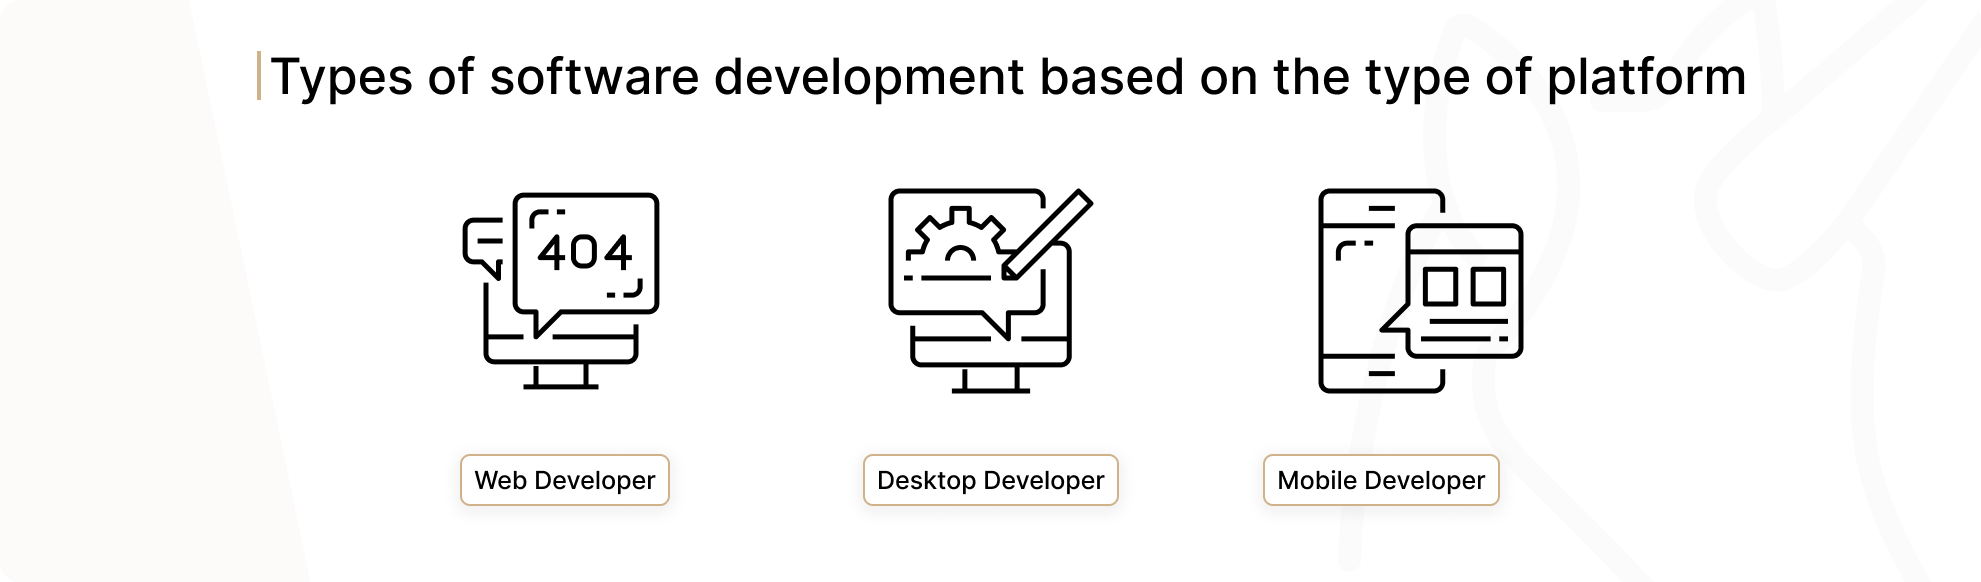 Types of Software Developers Based On Type Of Platform